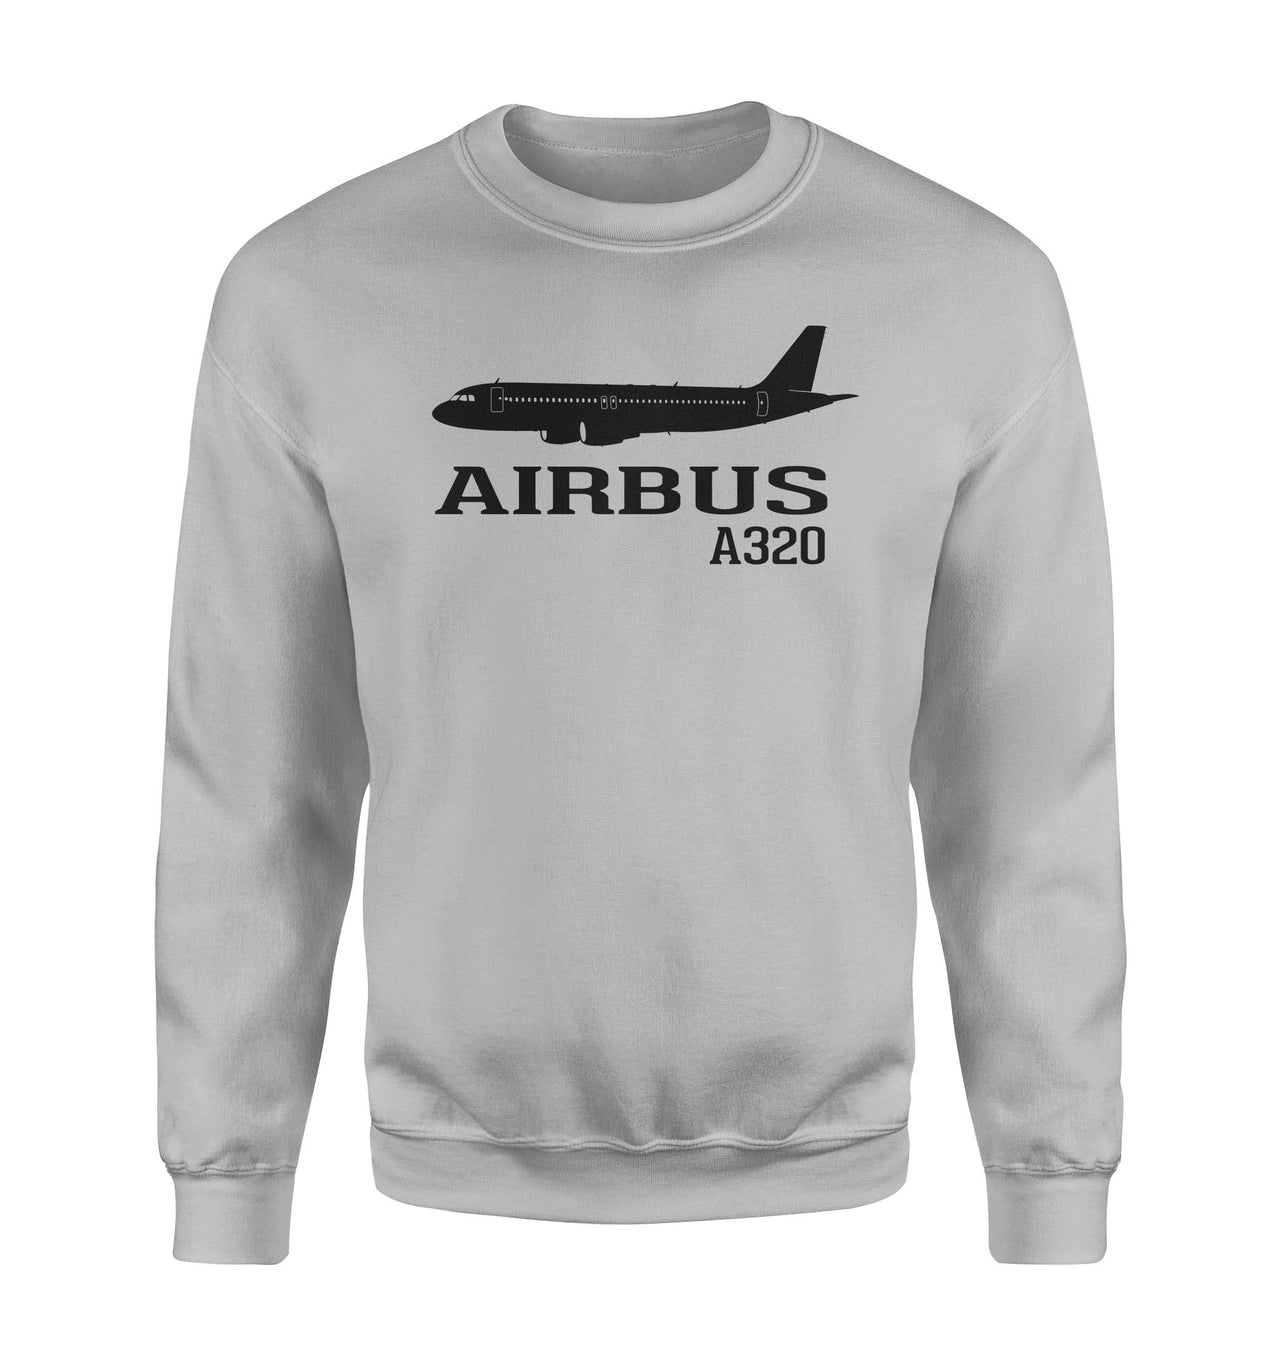 Airbus A320 Printed Sweatshirts